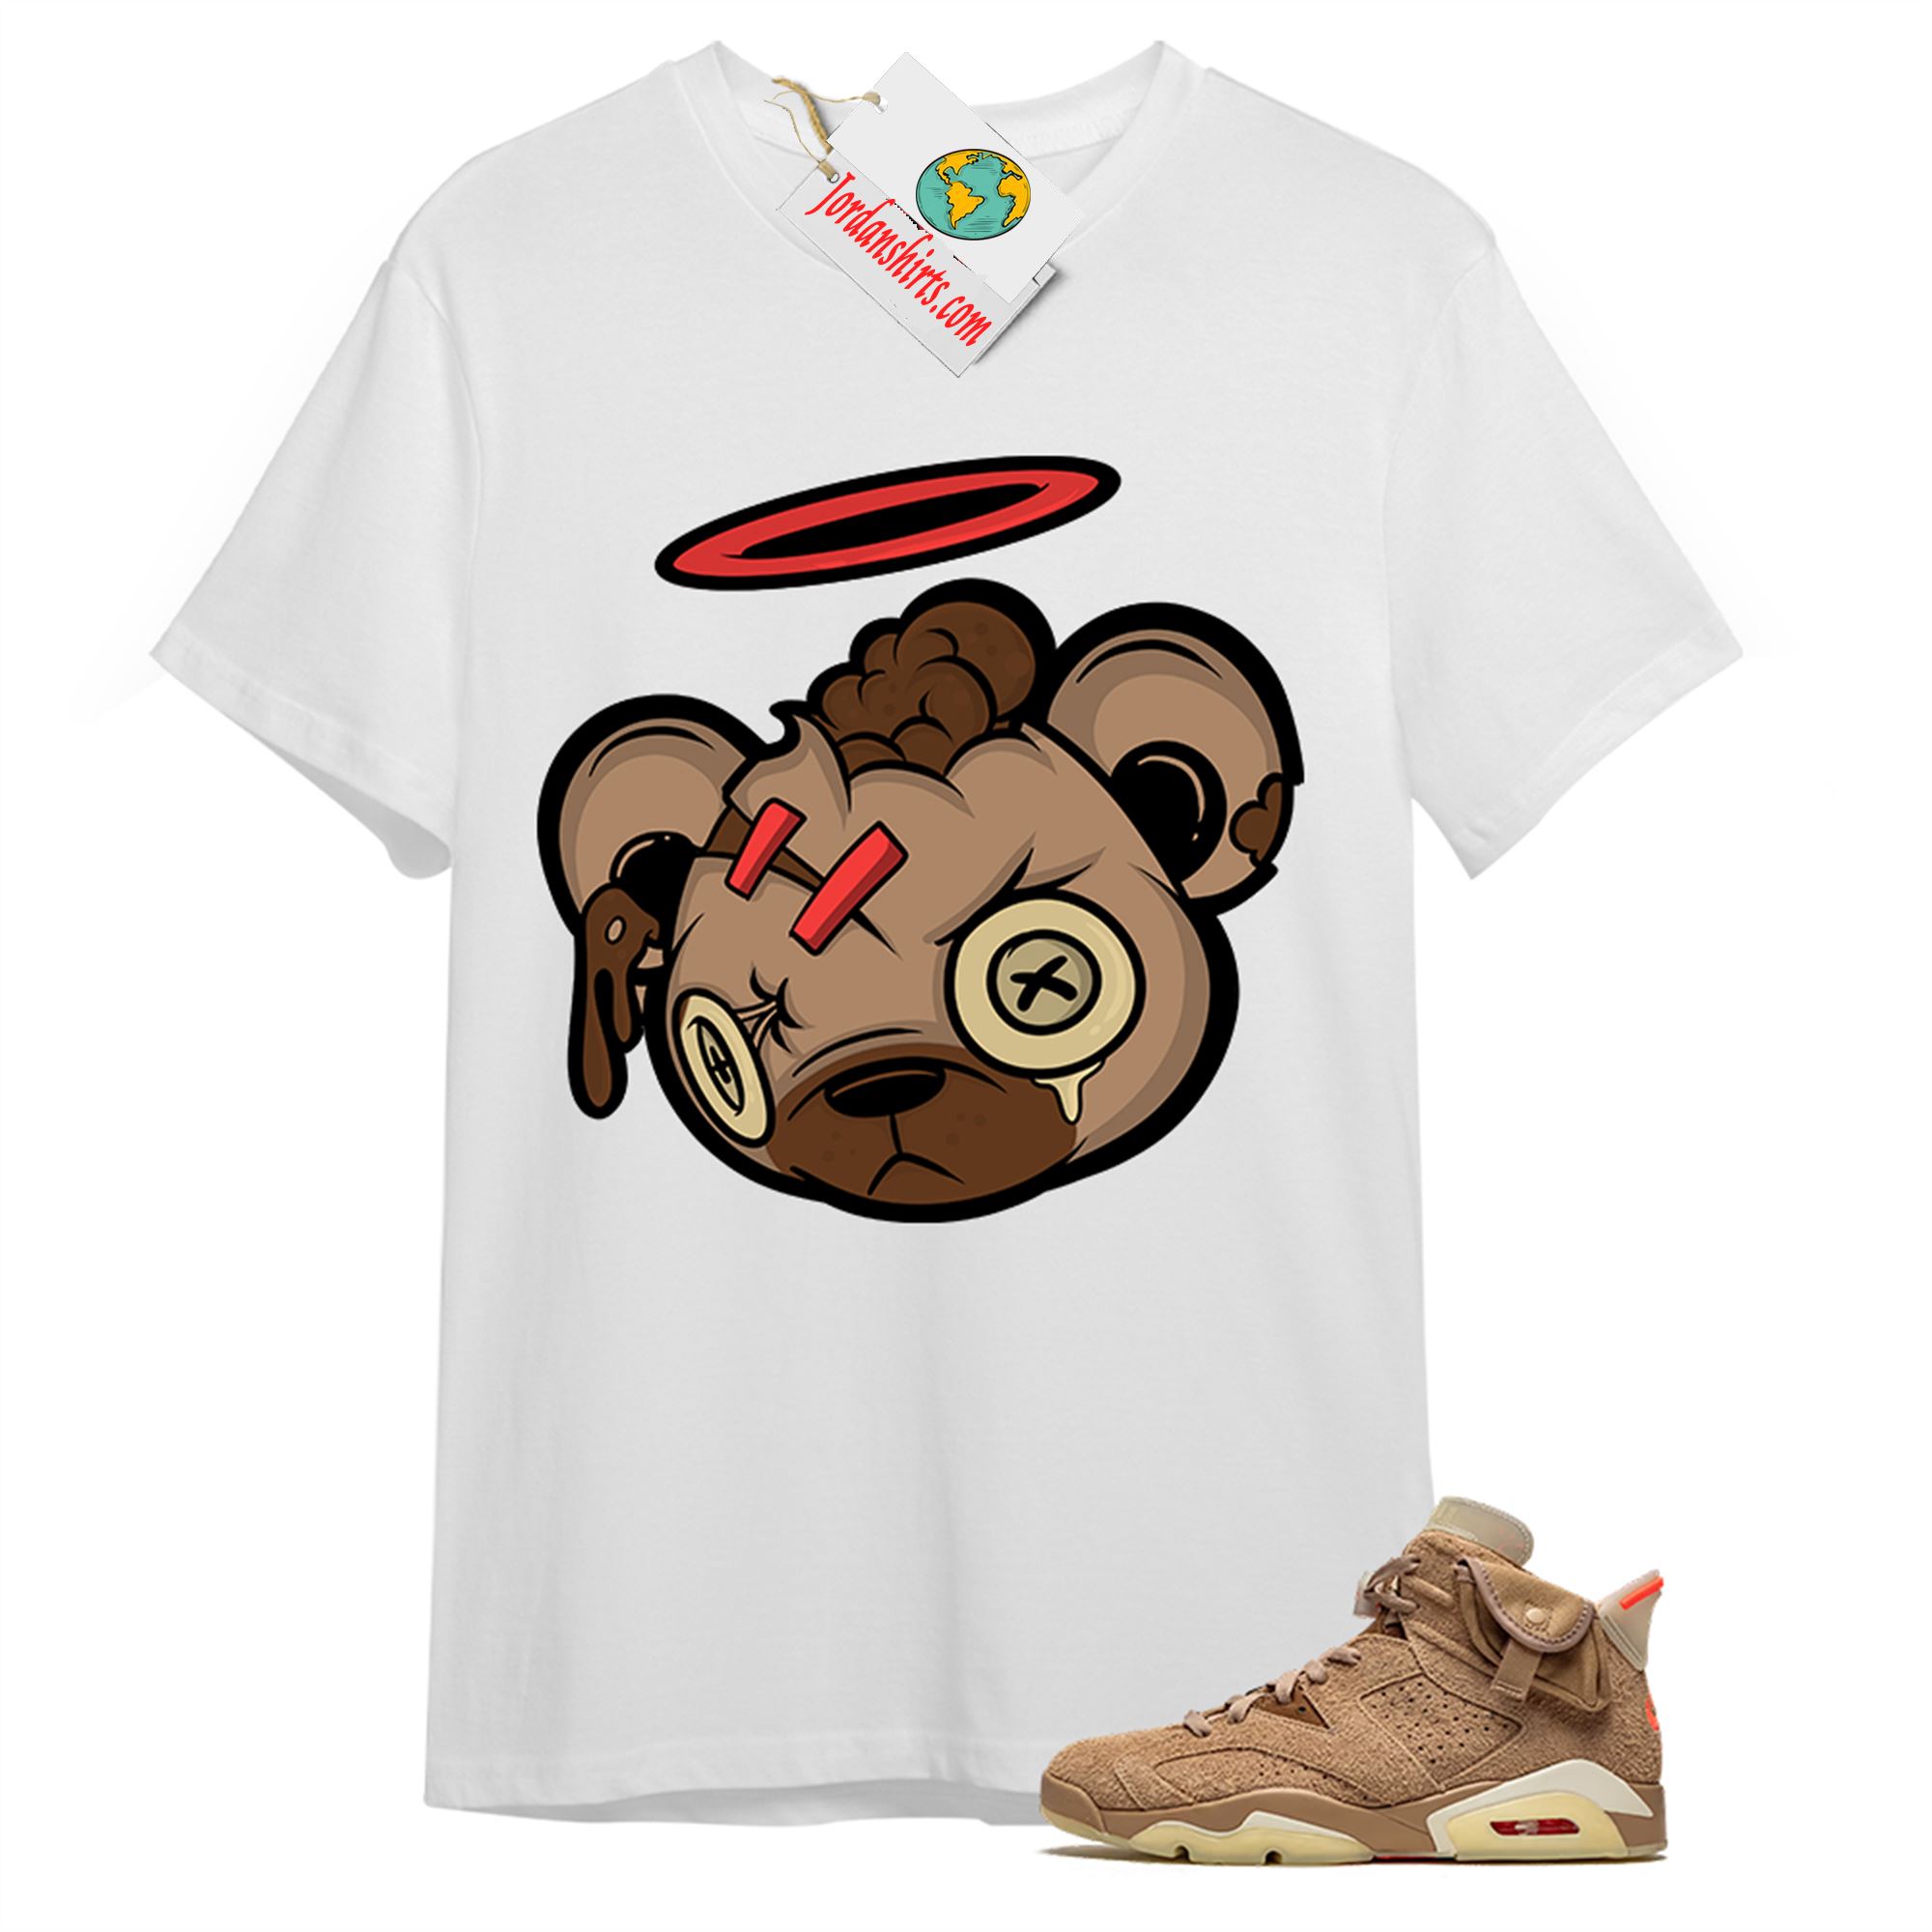 Jordan 6 Shirt, Halo Teddy White T-shirt Air Jordan 6 Travis Scott 6s Plus Size Up To 5xl